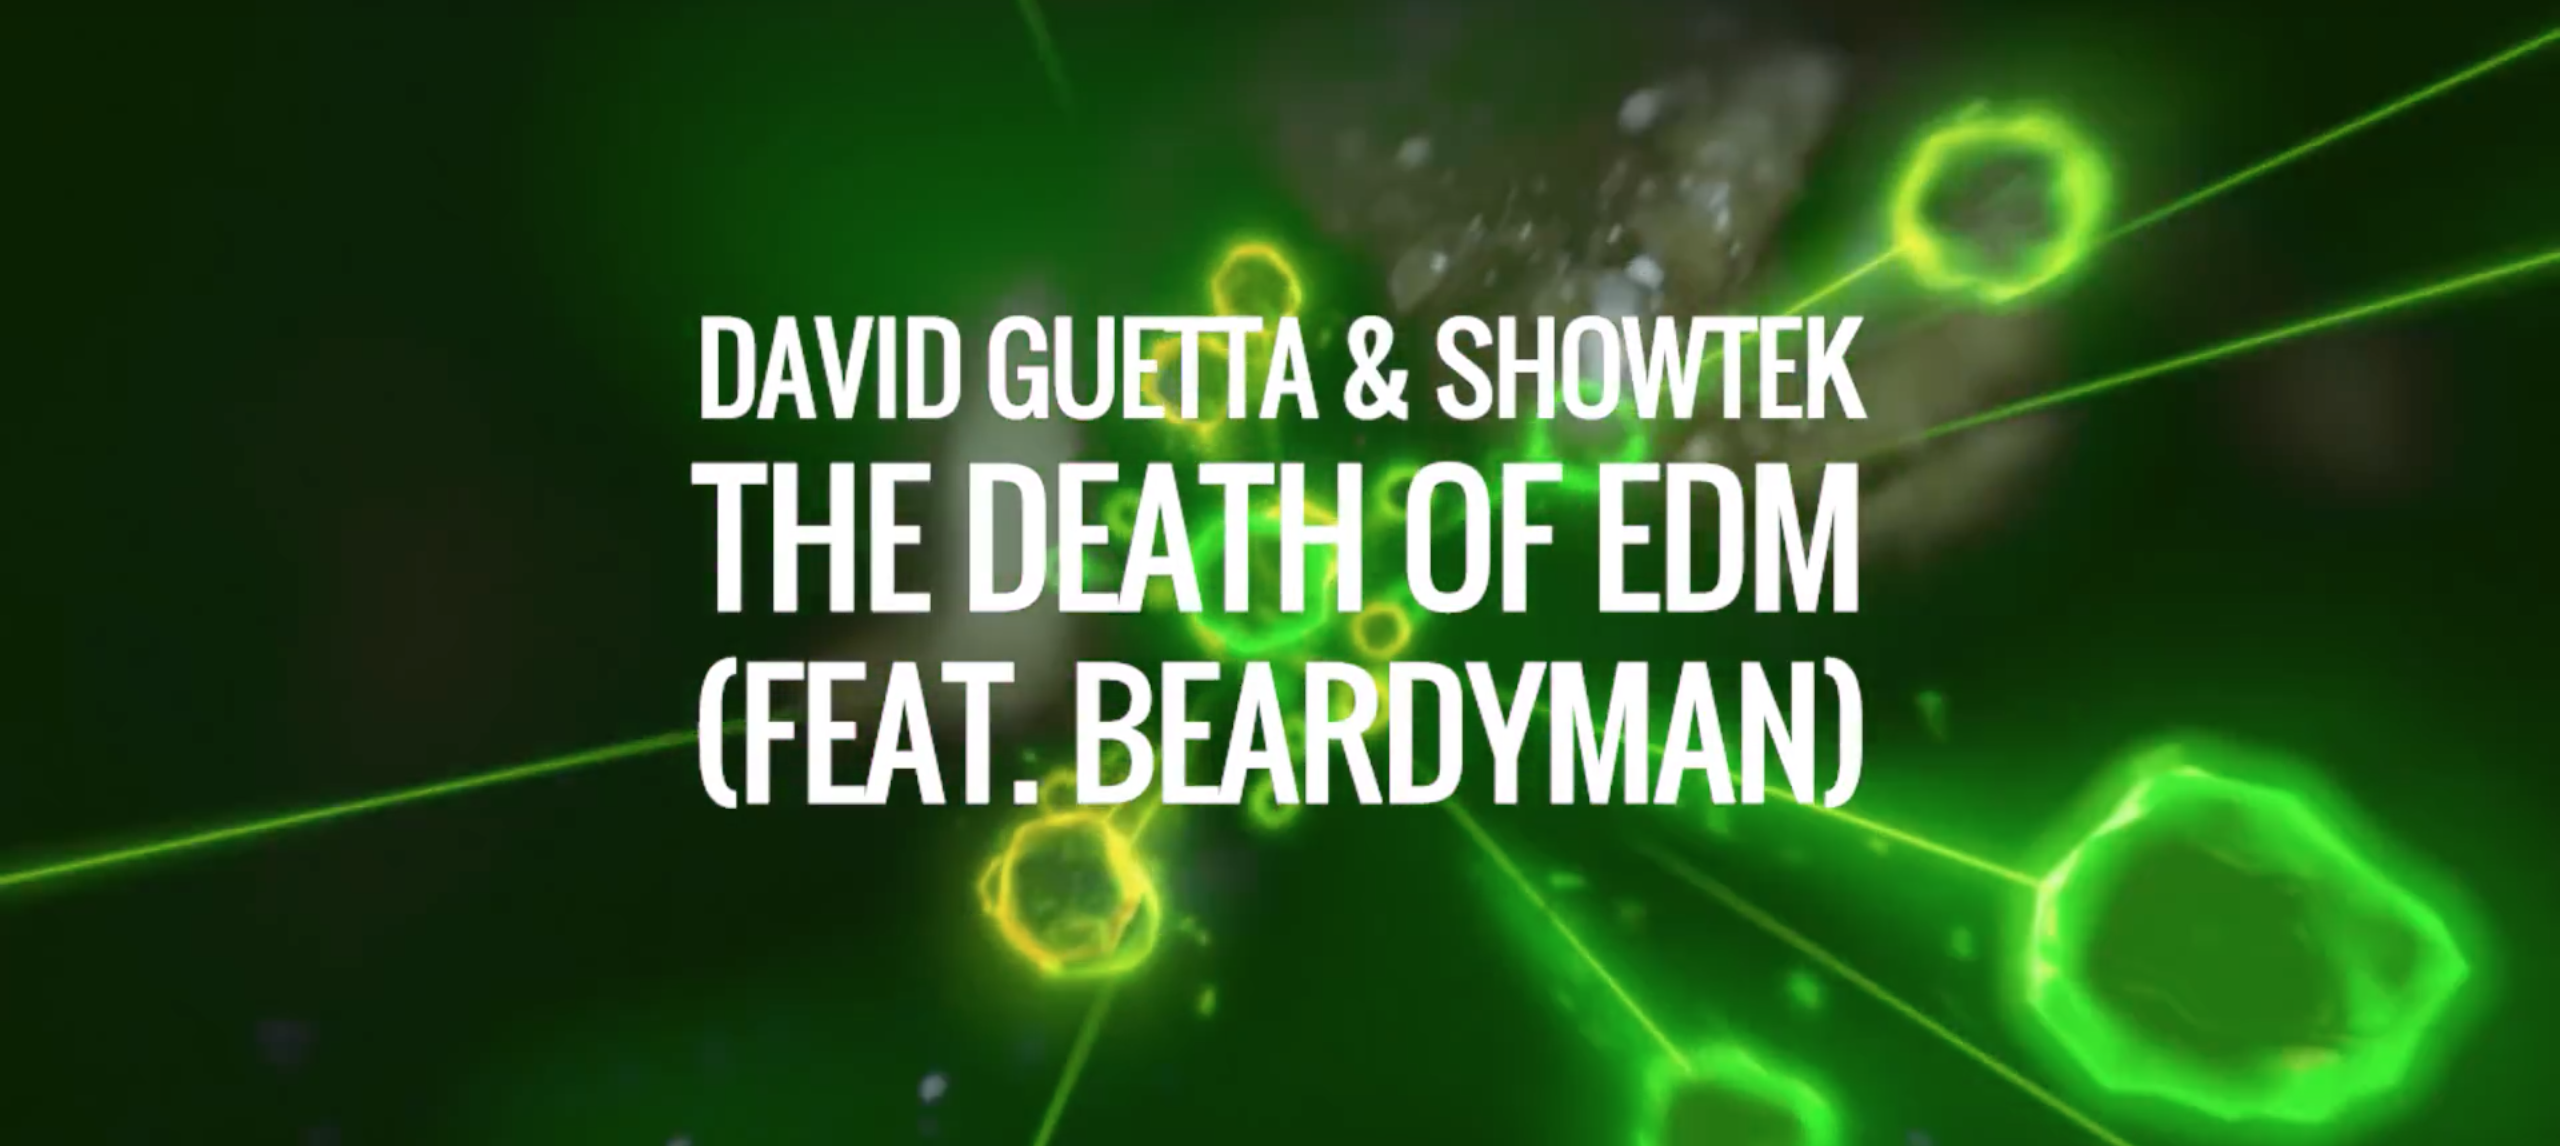 David Guetta & Showtek – The Death of EDM